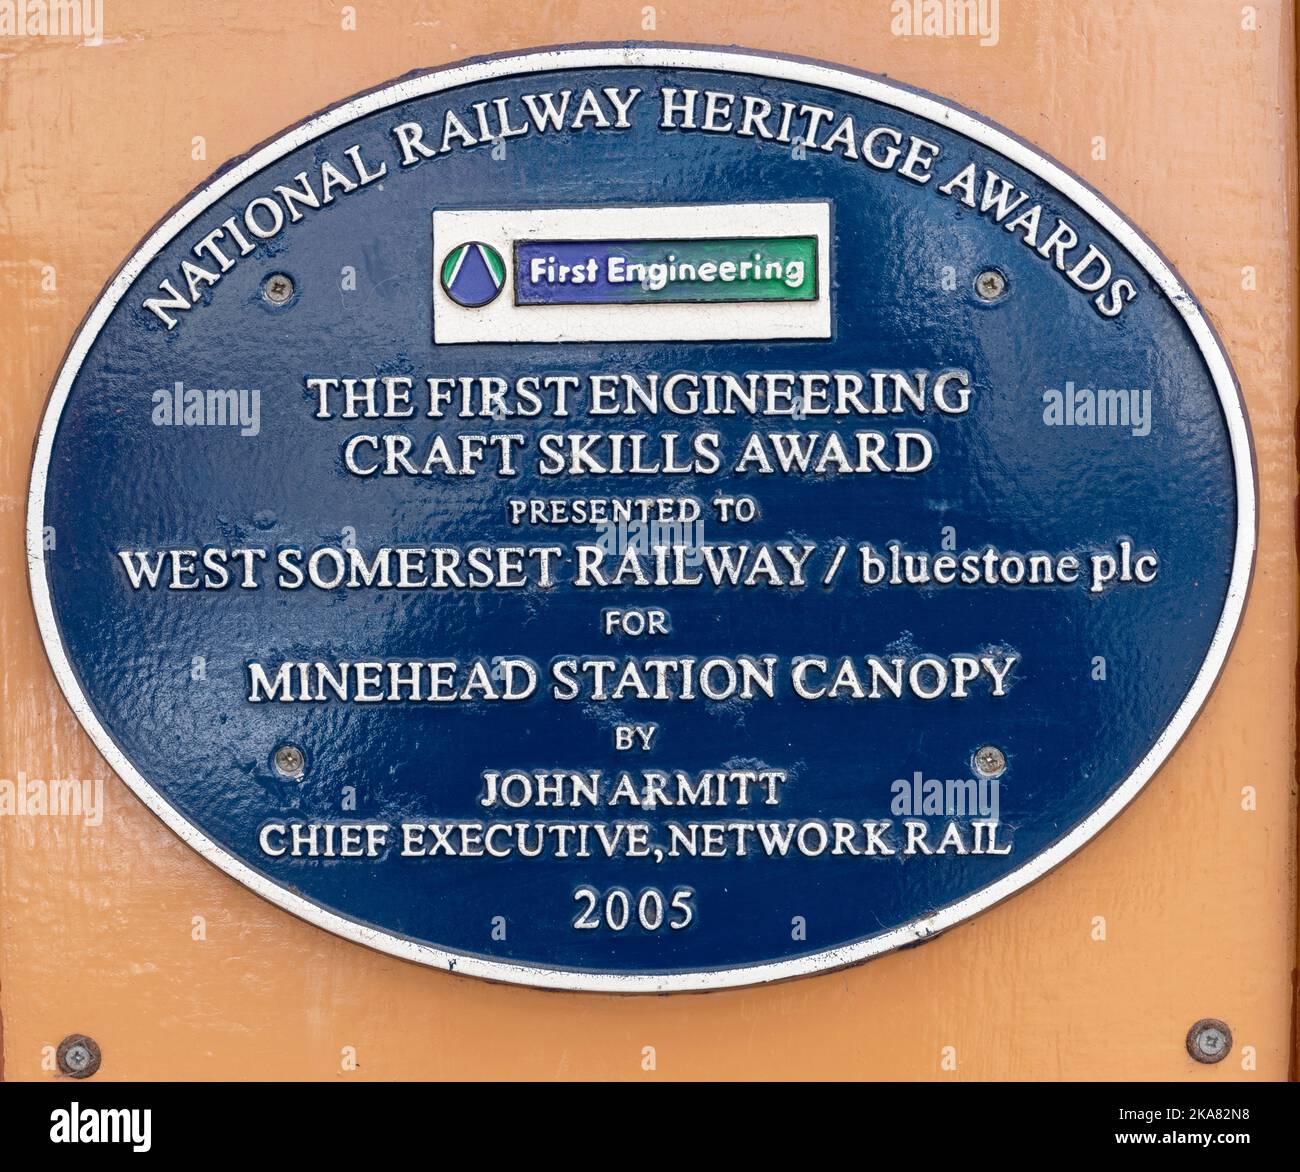 Blaue Plakette der National Railway Heritage Awards am Bahnhof Minehead, West Somerset Preservation Railway, Minehead, Somerset, England, Großbritannien Stockfoto